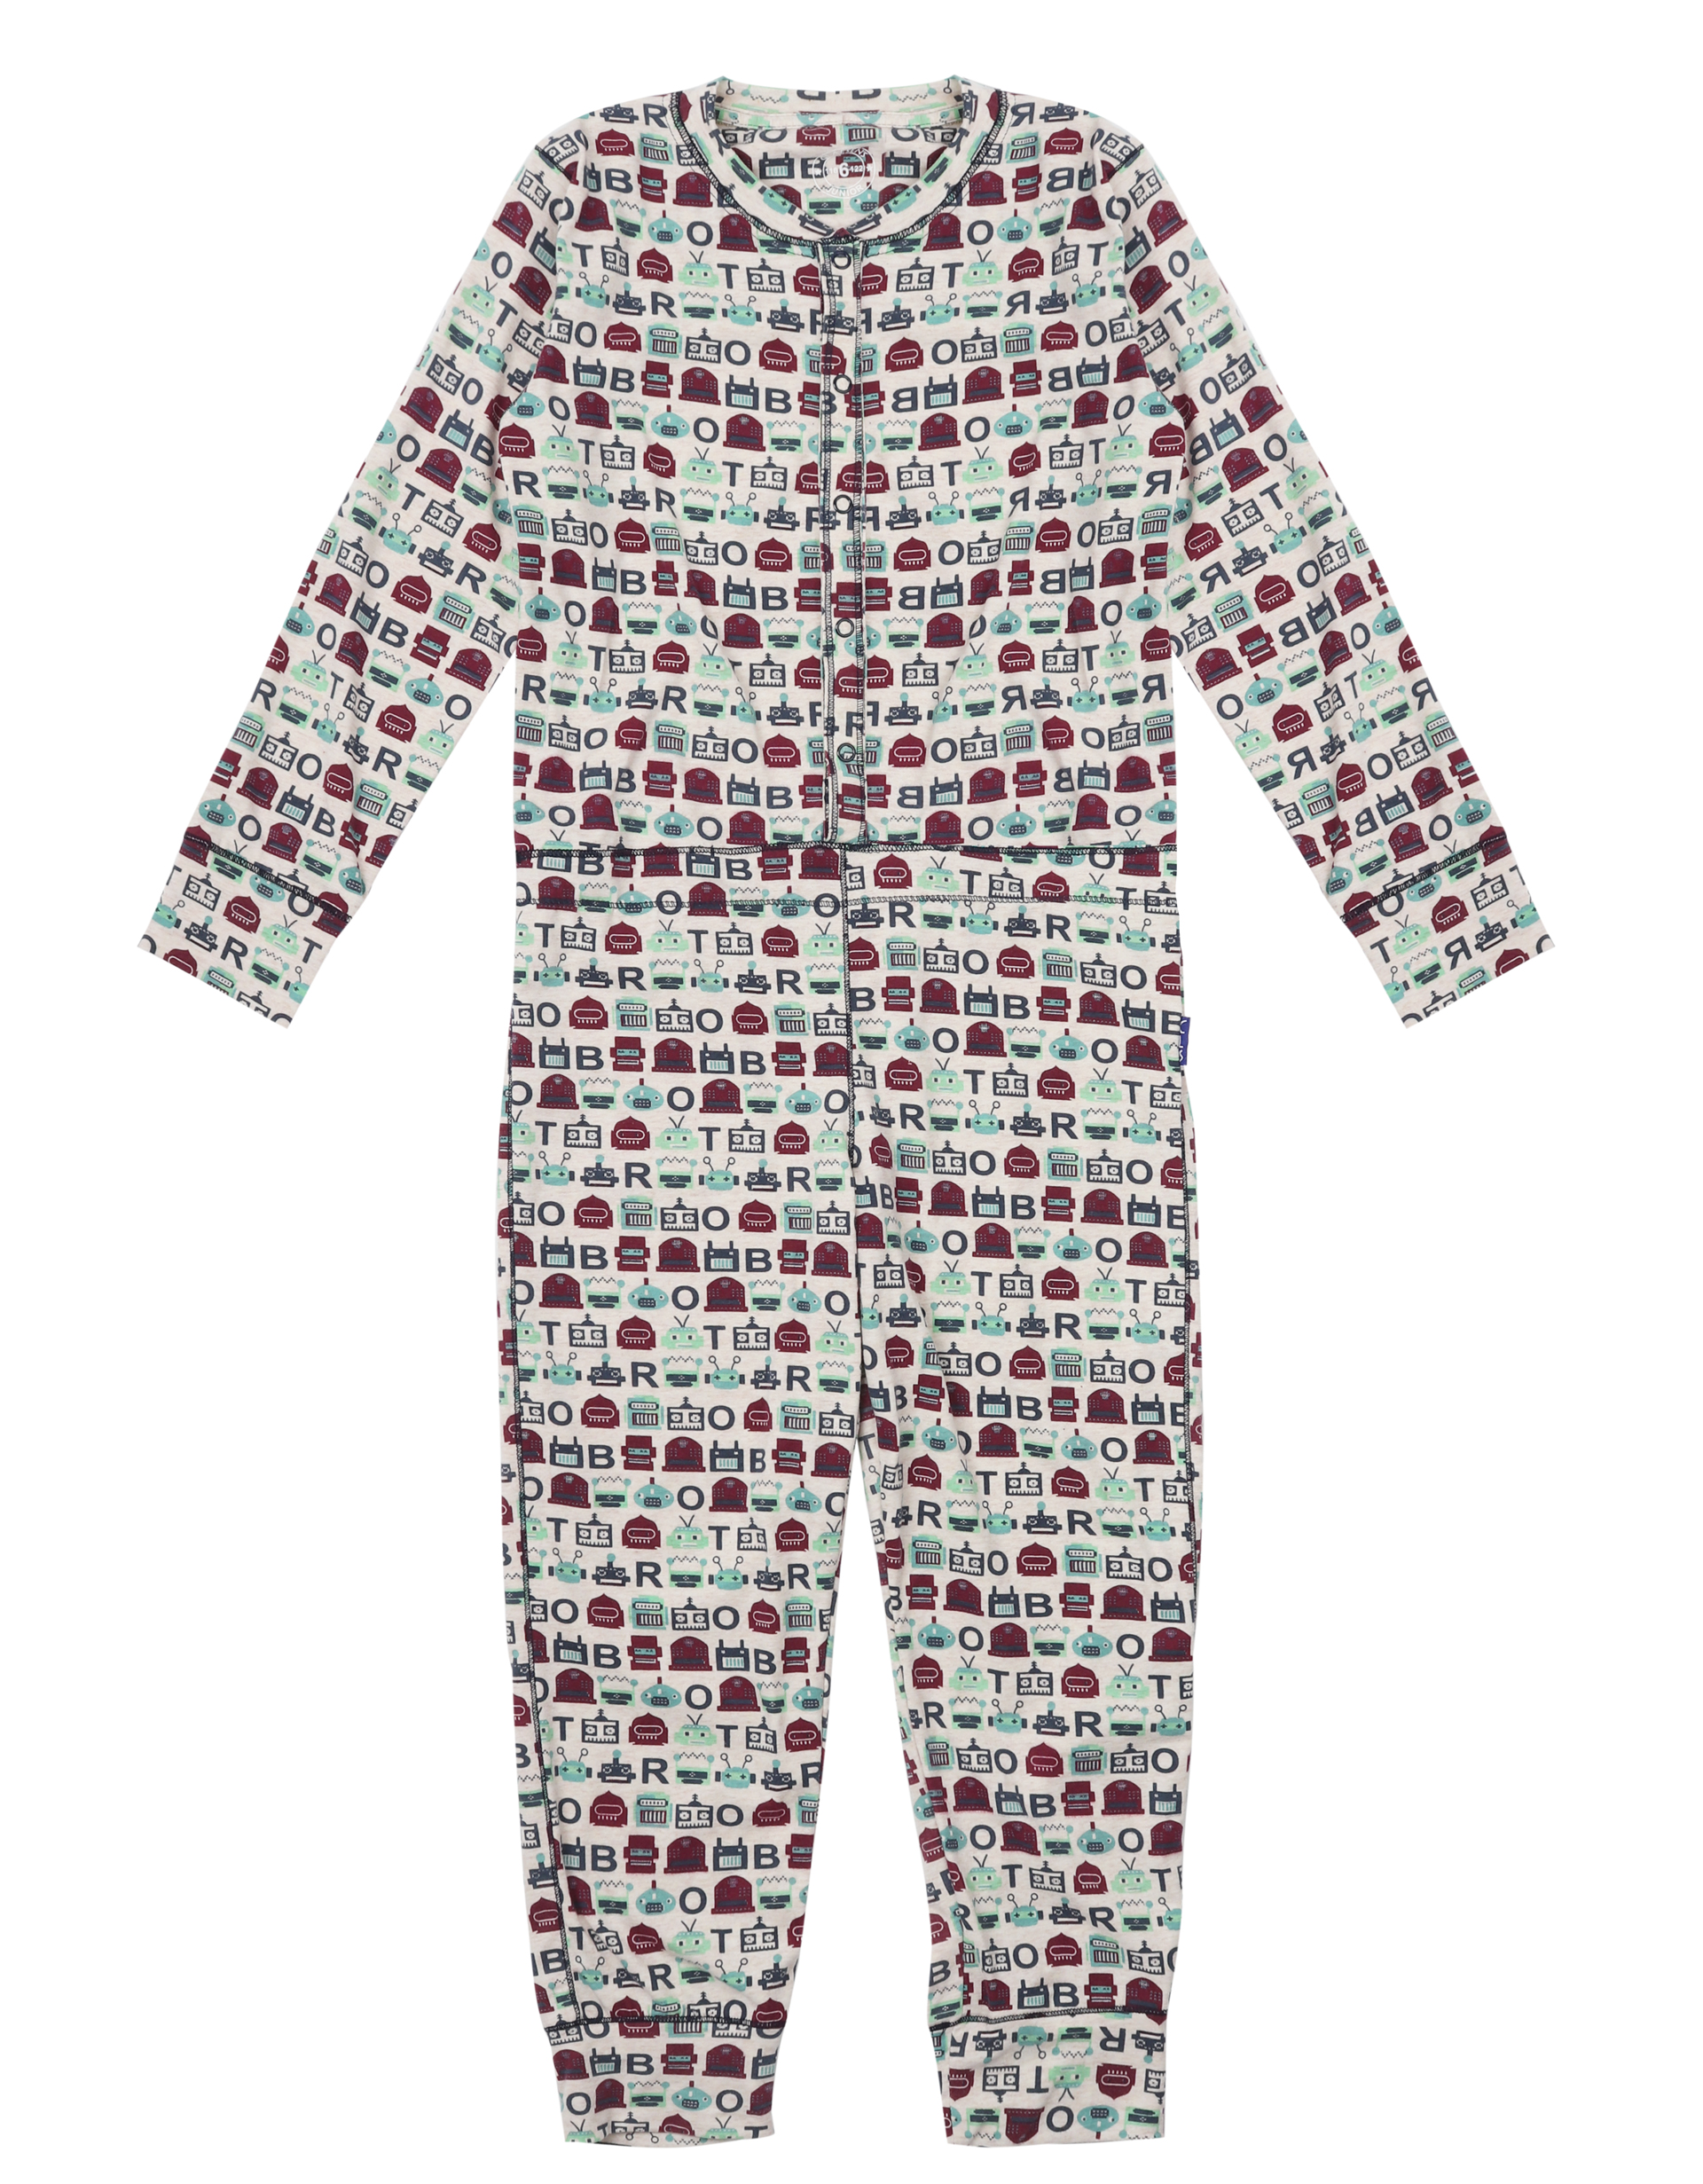 Boys Pyjama Suit